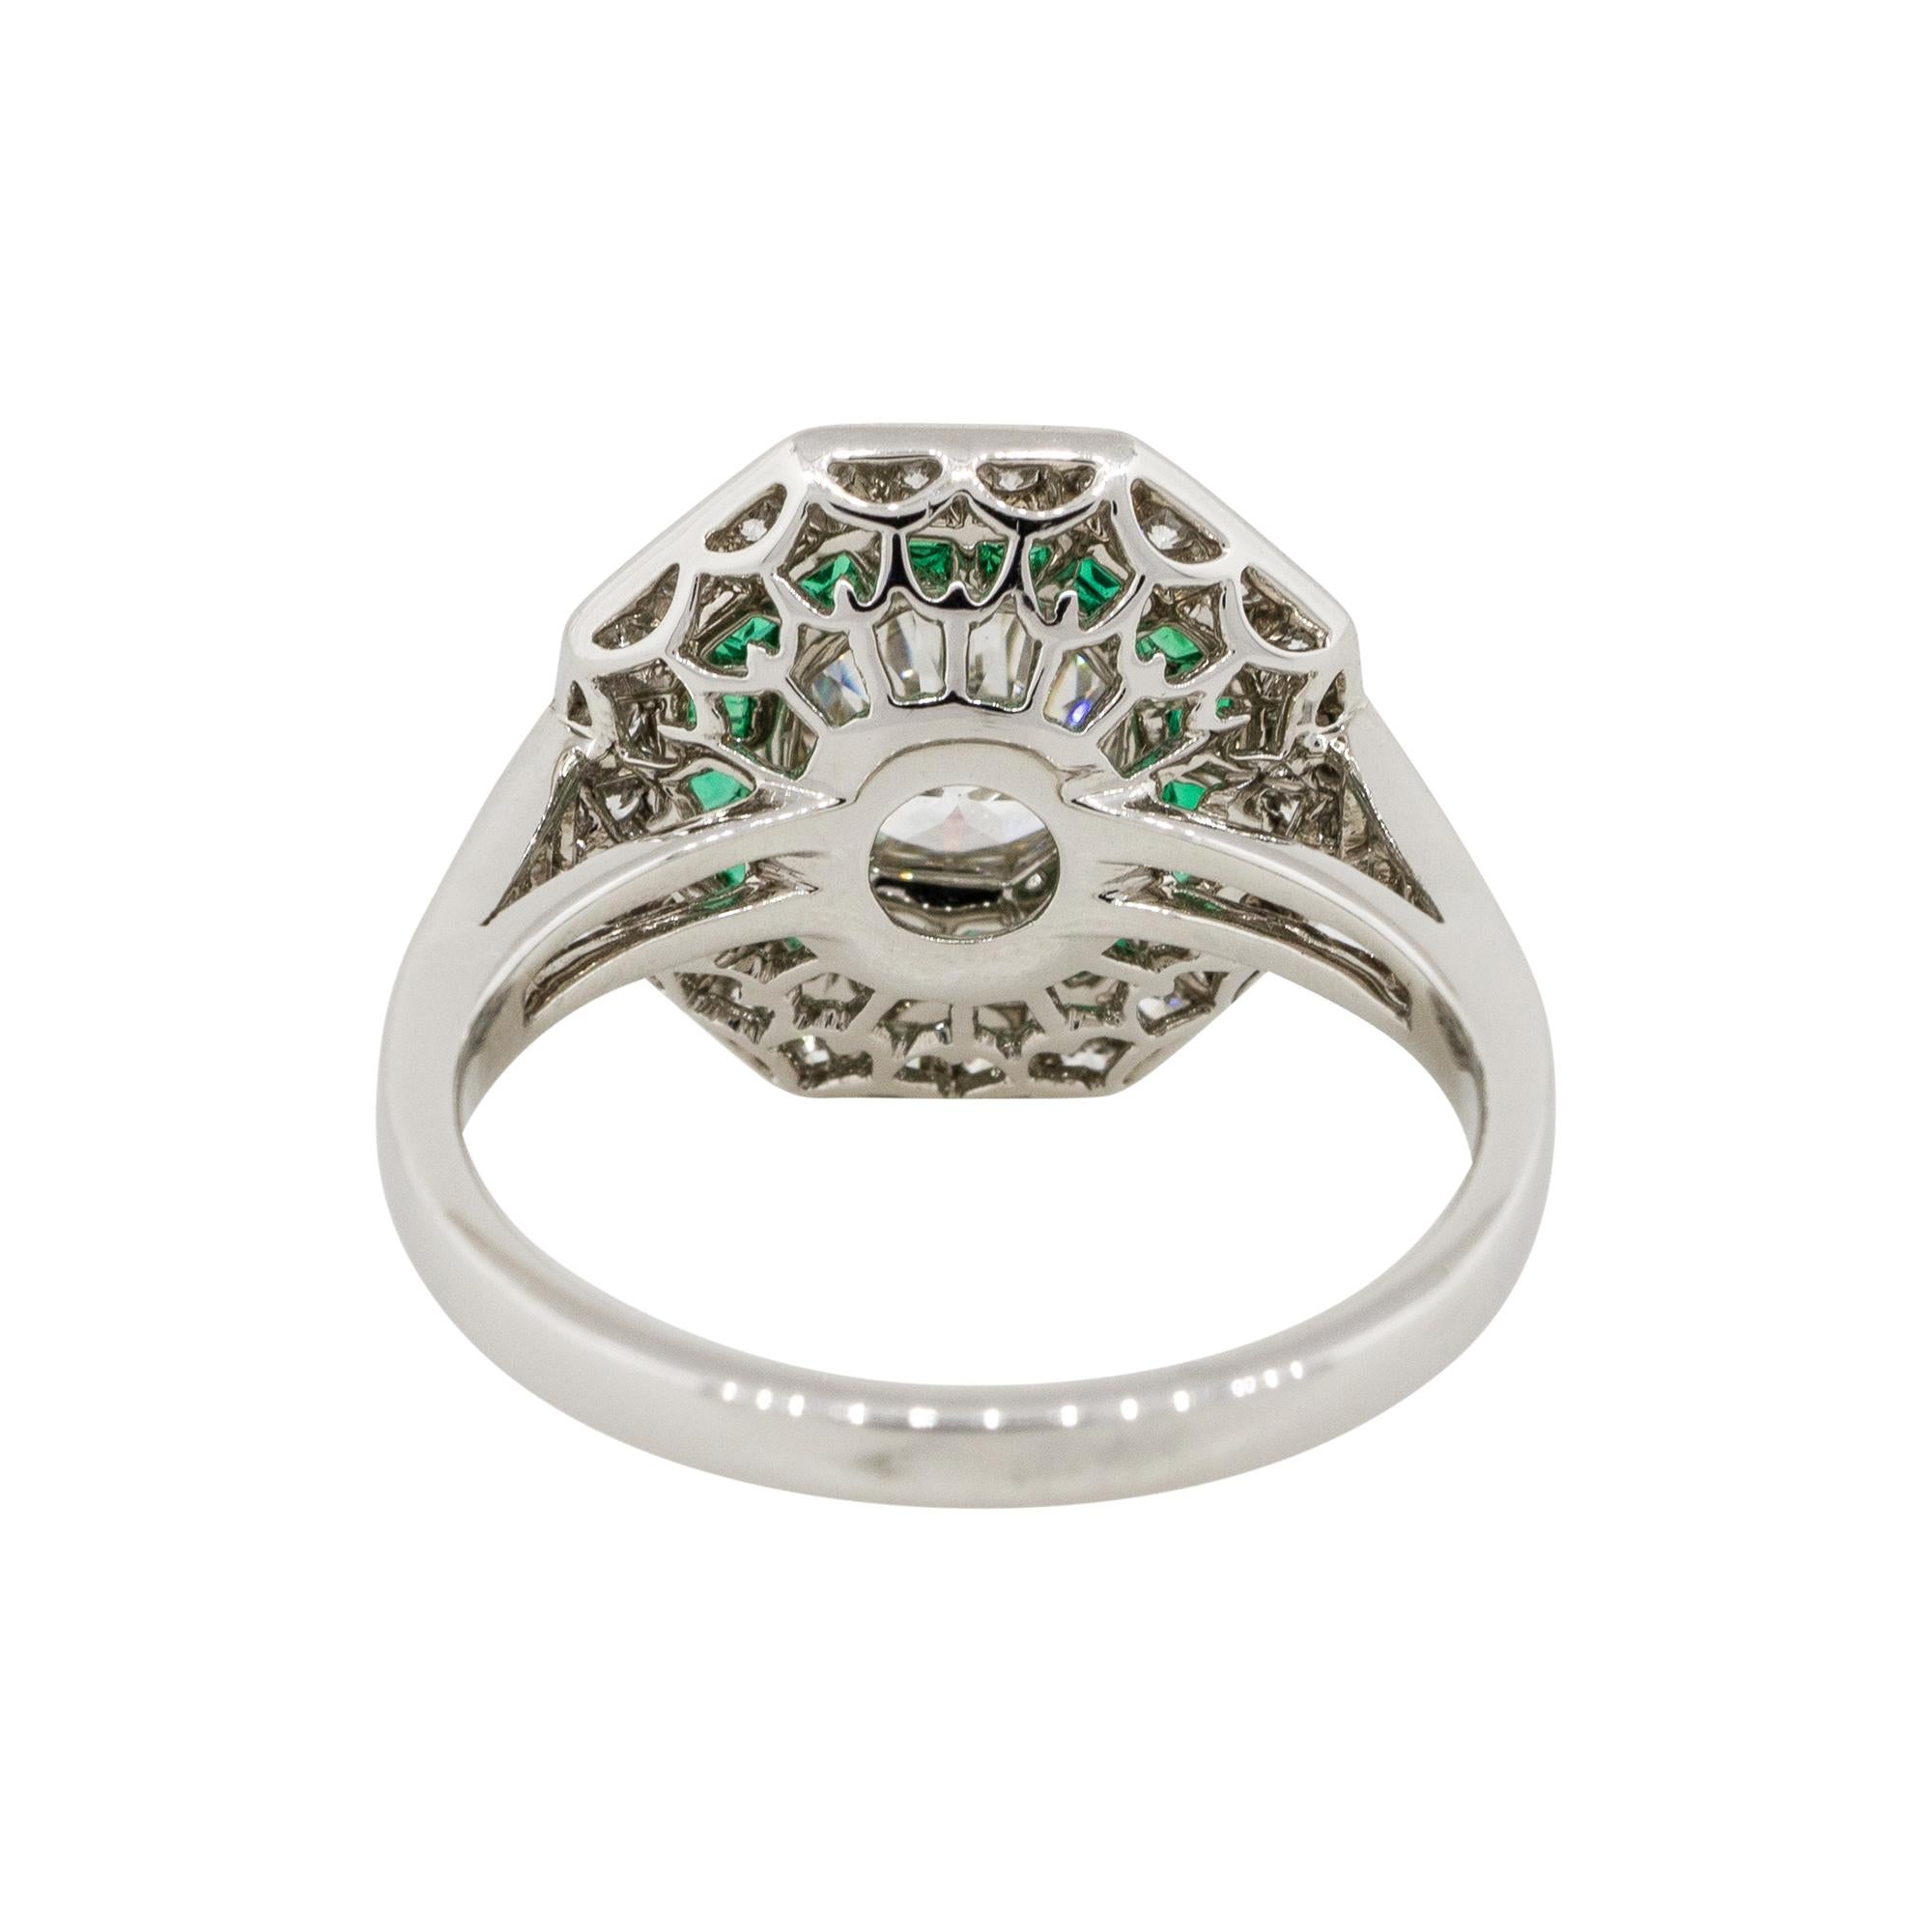 Women's 1.25 Carat Old Euro Cut Diamond Hexagonal Ring with Emeralds Platinum